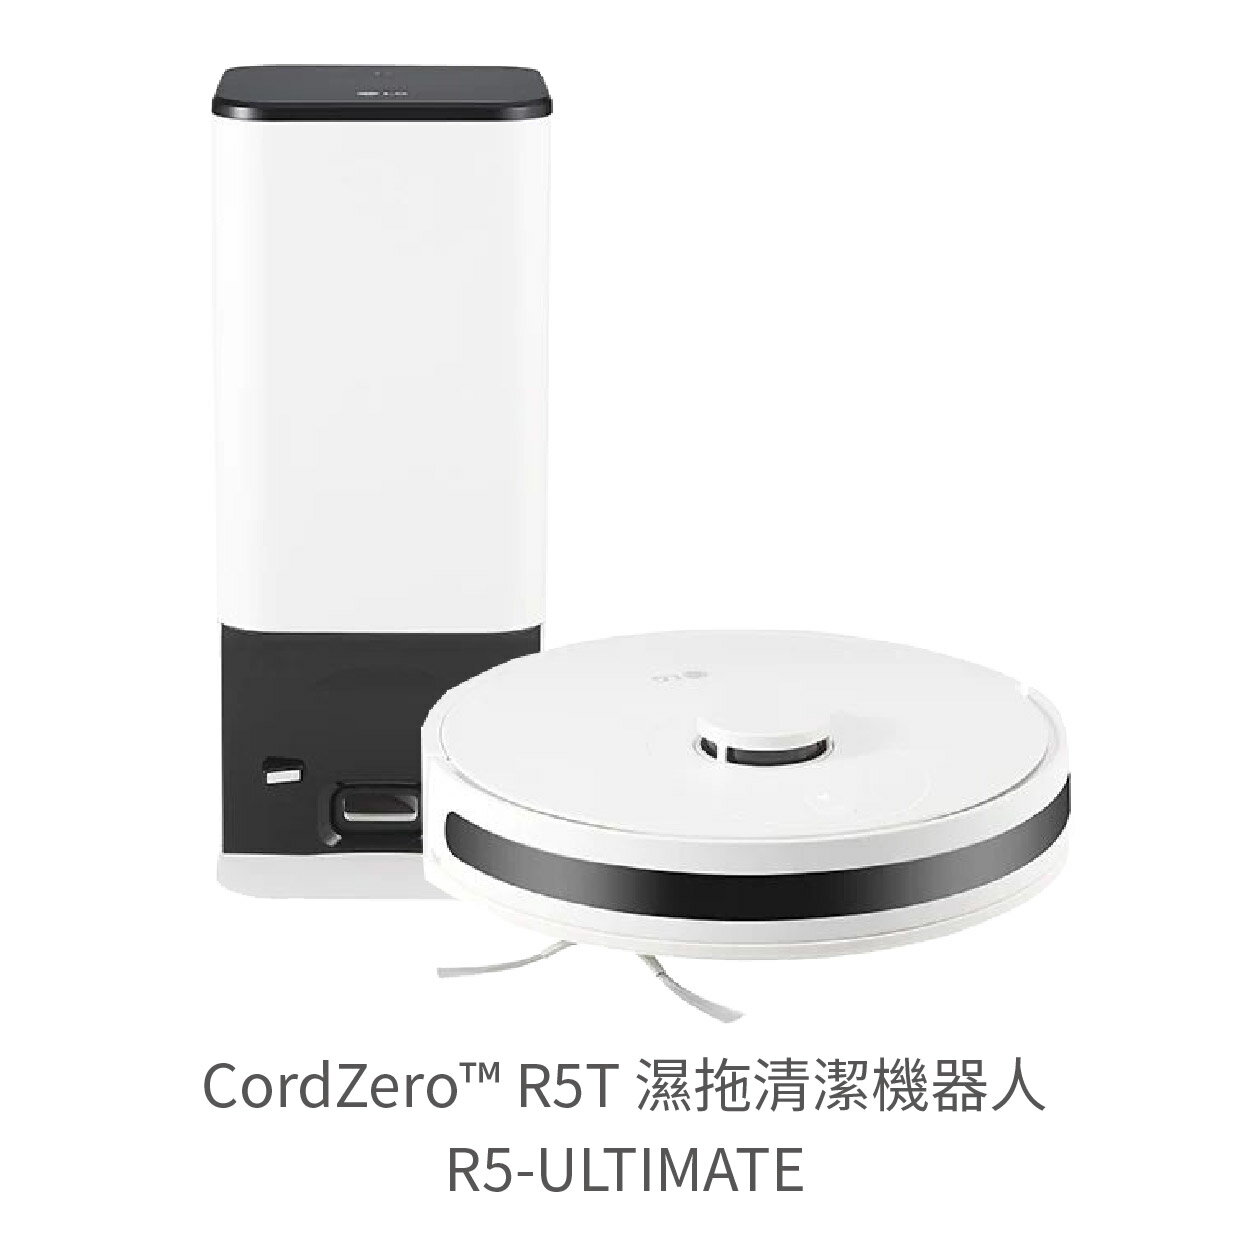 【點數10%回饋】R5-ULTIMATE LG CordZero™ R5T 濕拖清潔機器人